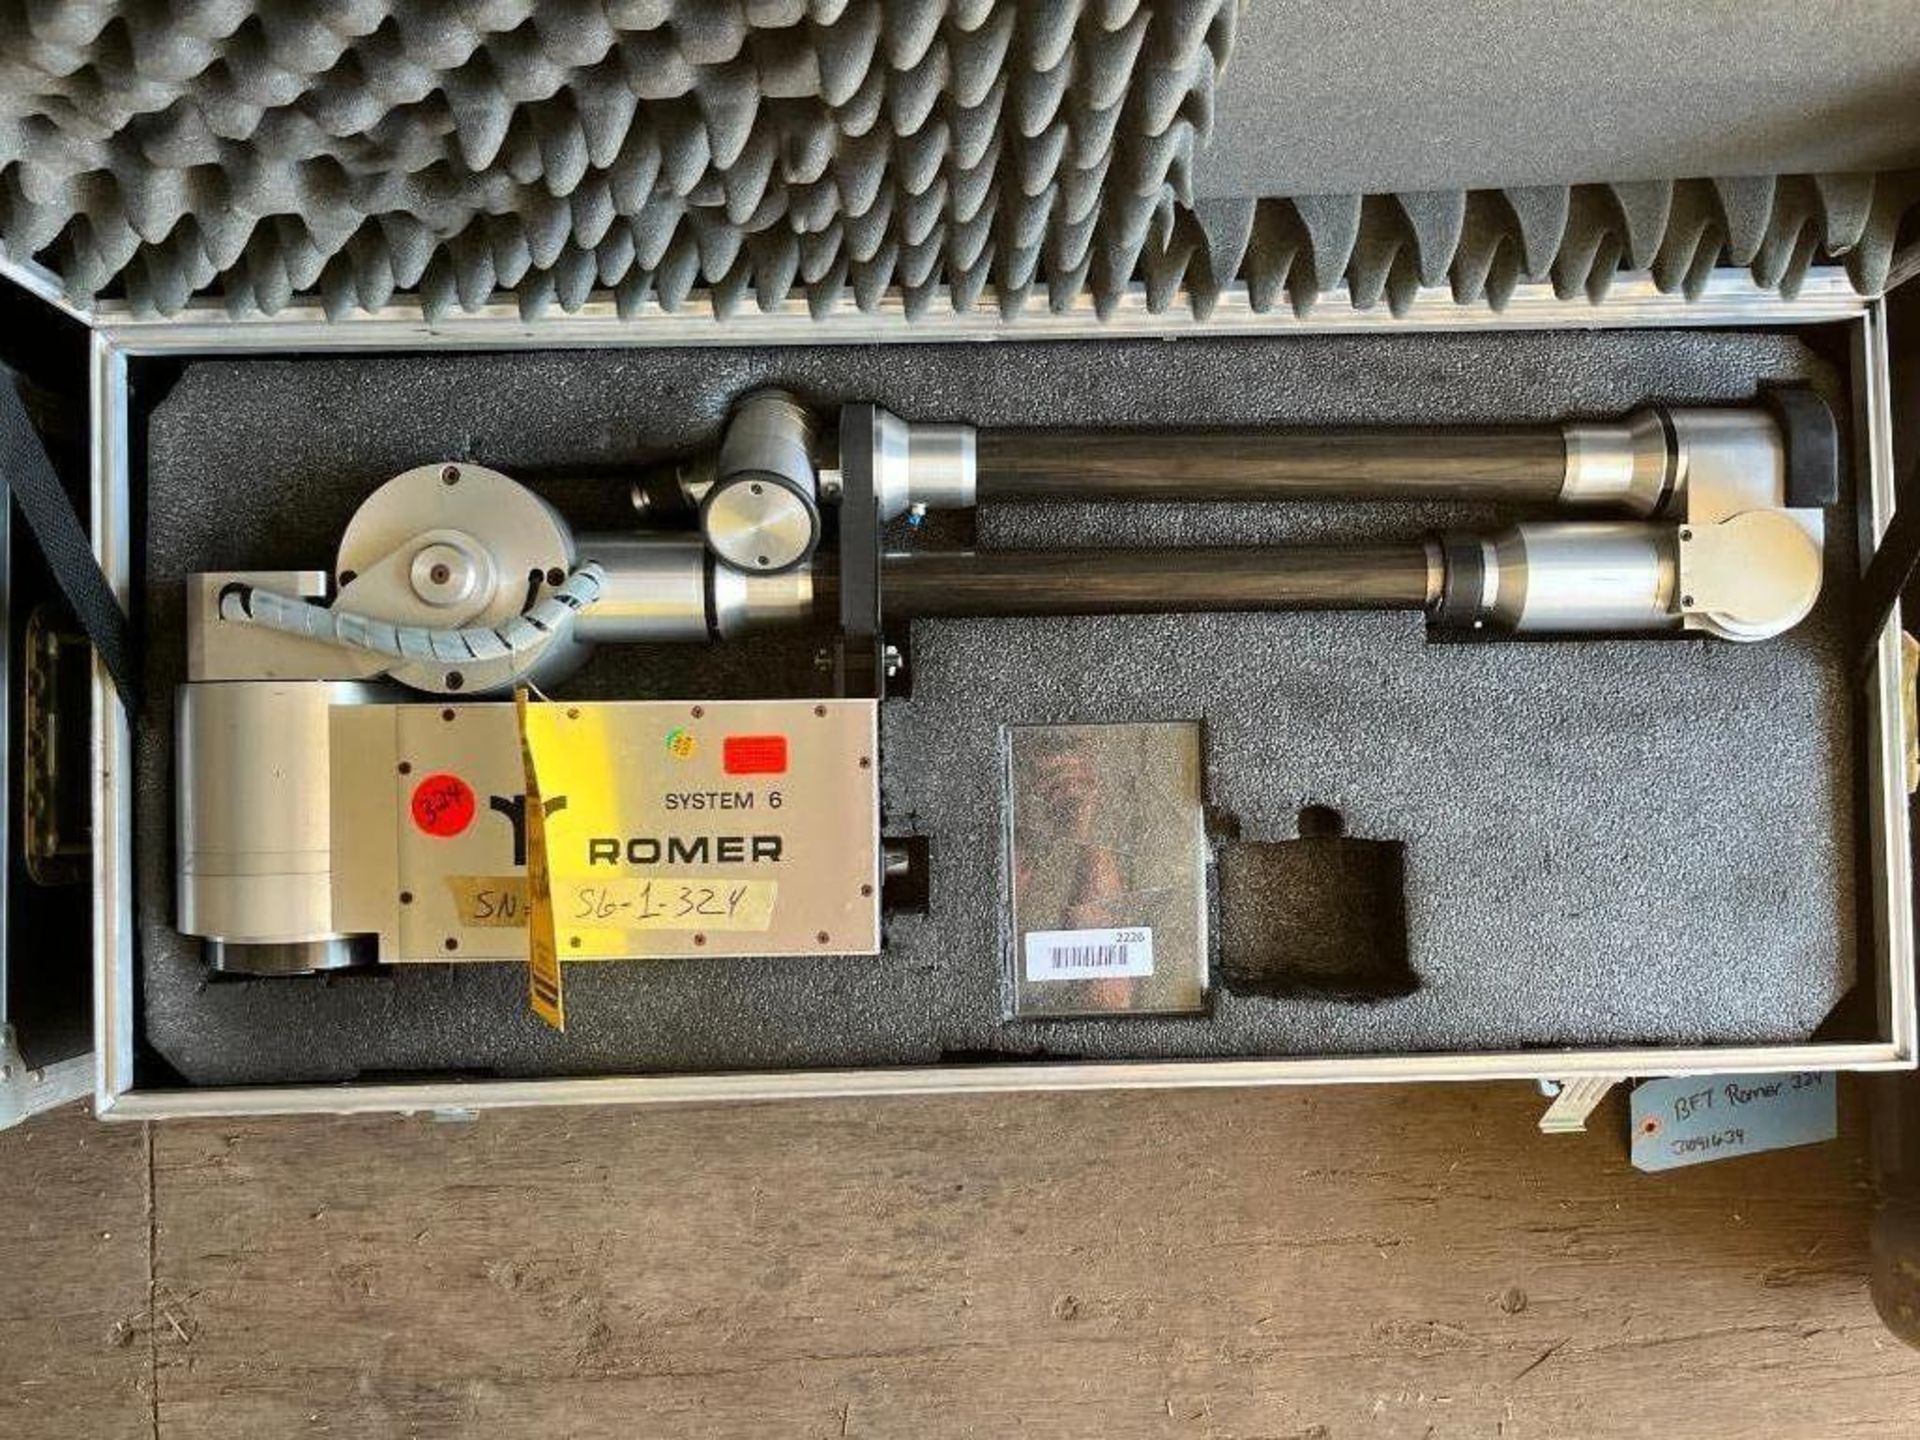 Romer Portable Measuring Arm, Type 6, s/n S6-1-324 - Image 2 of 2